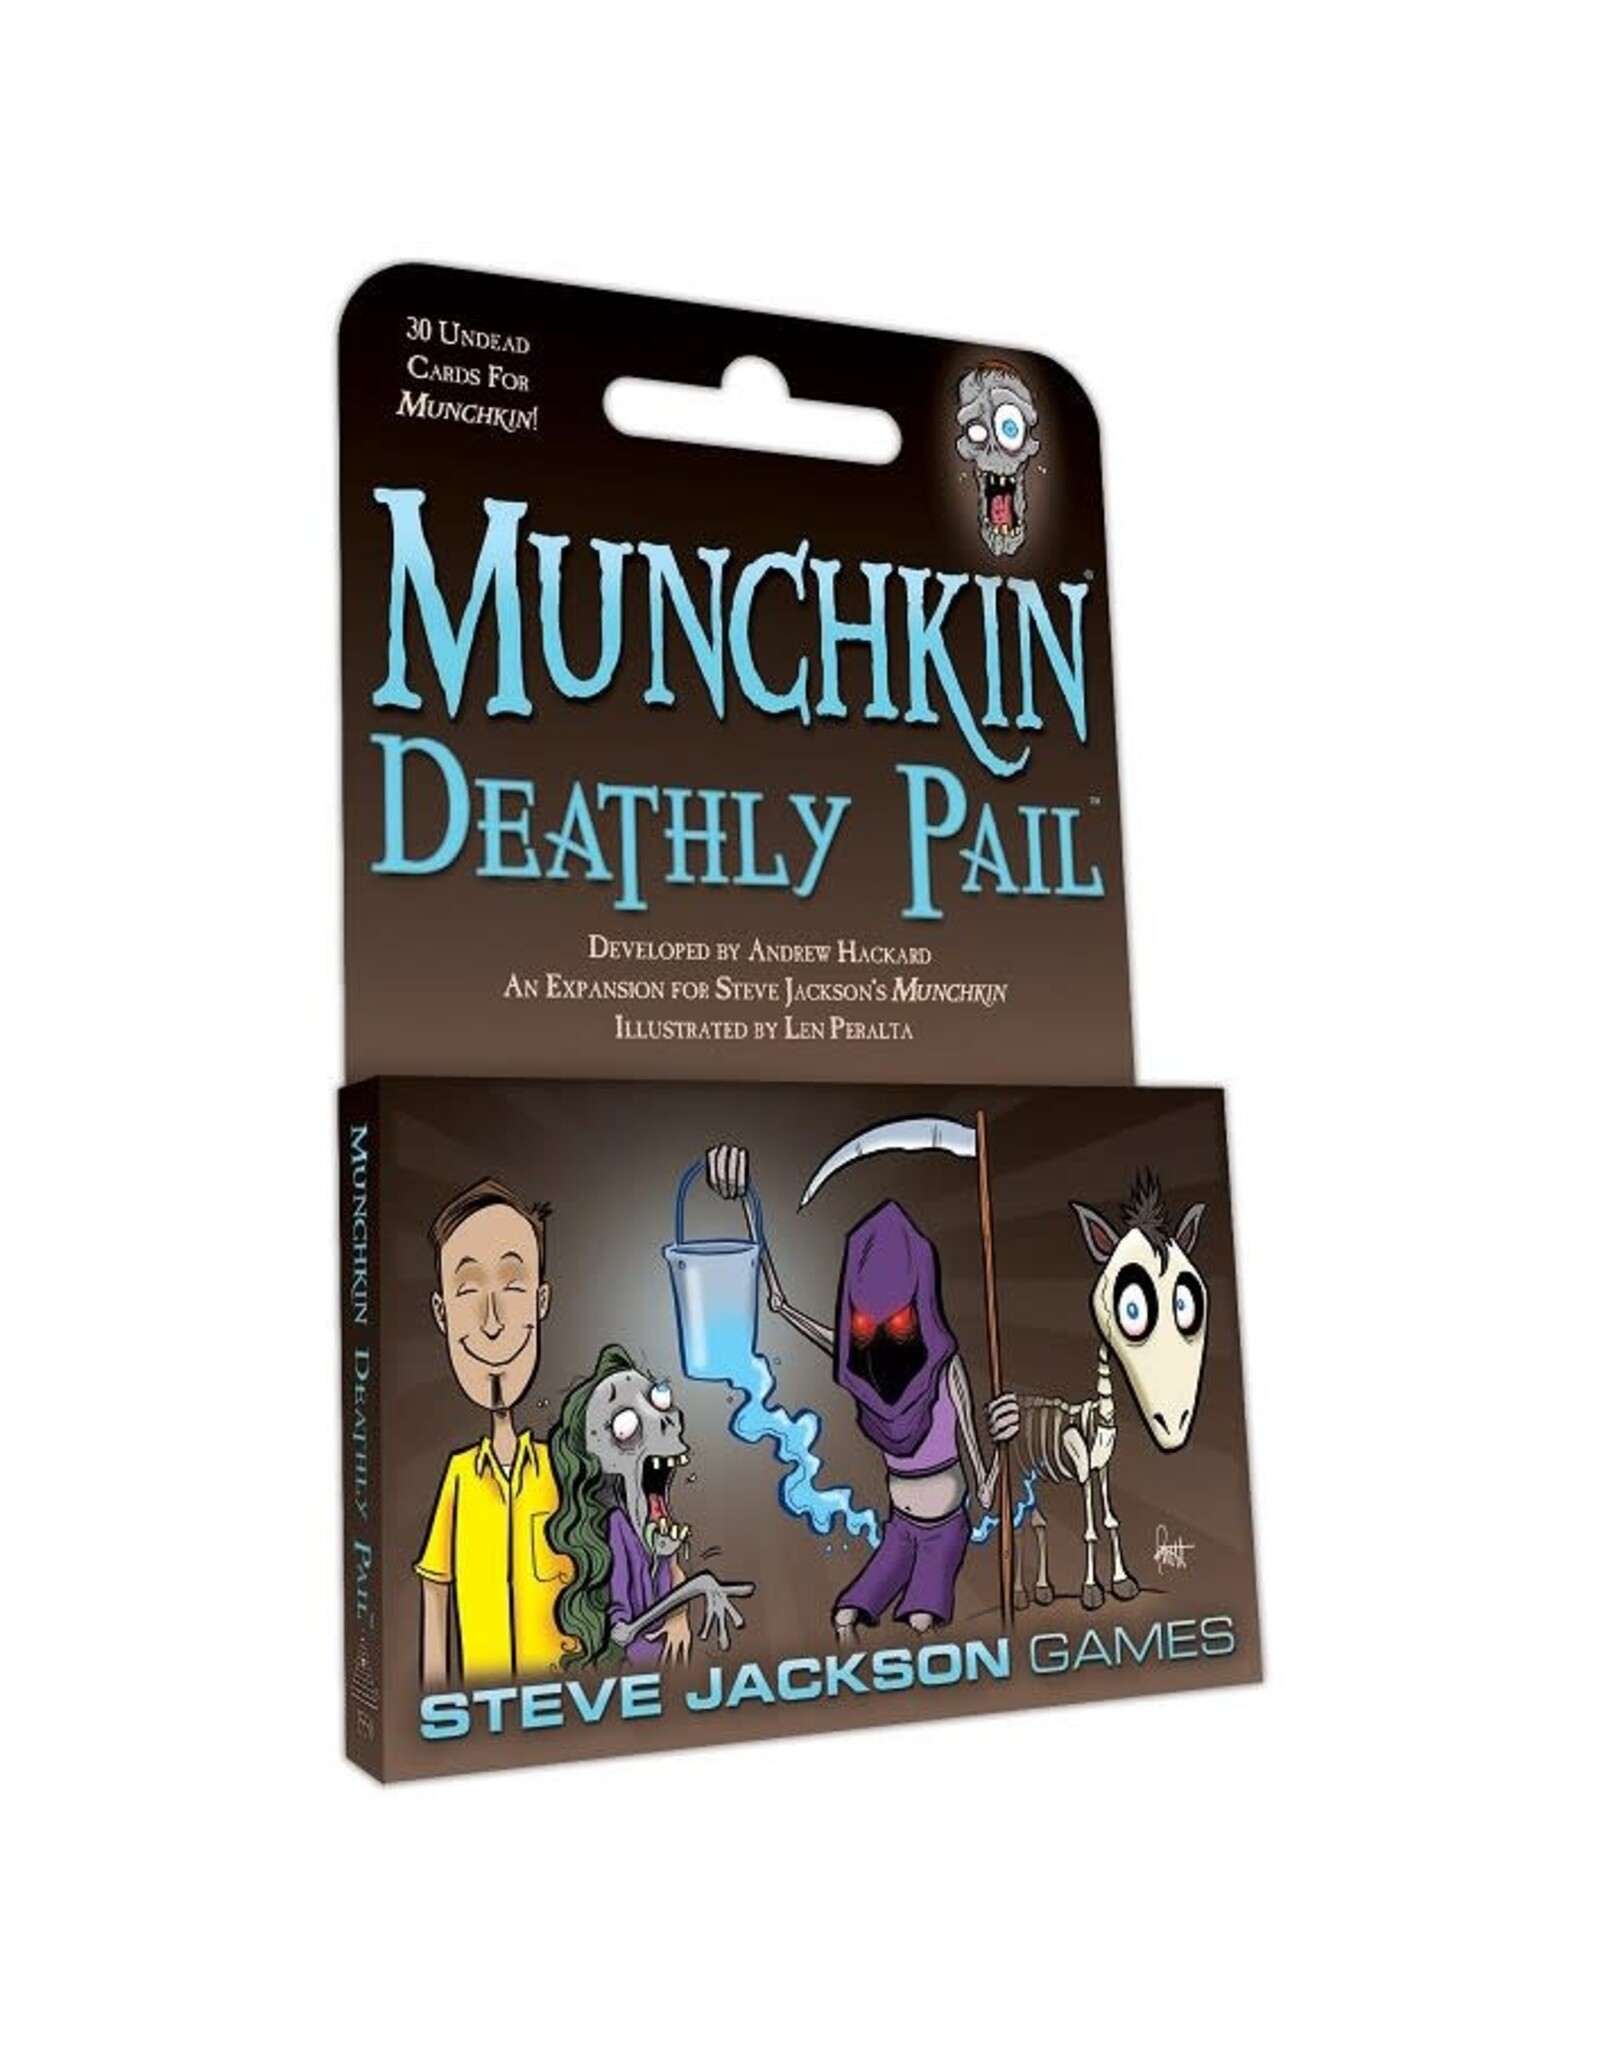 Steve Jackson Games Munchkin: Deathly Pail